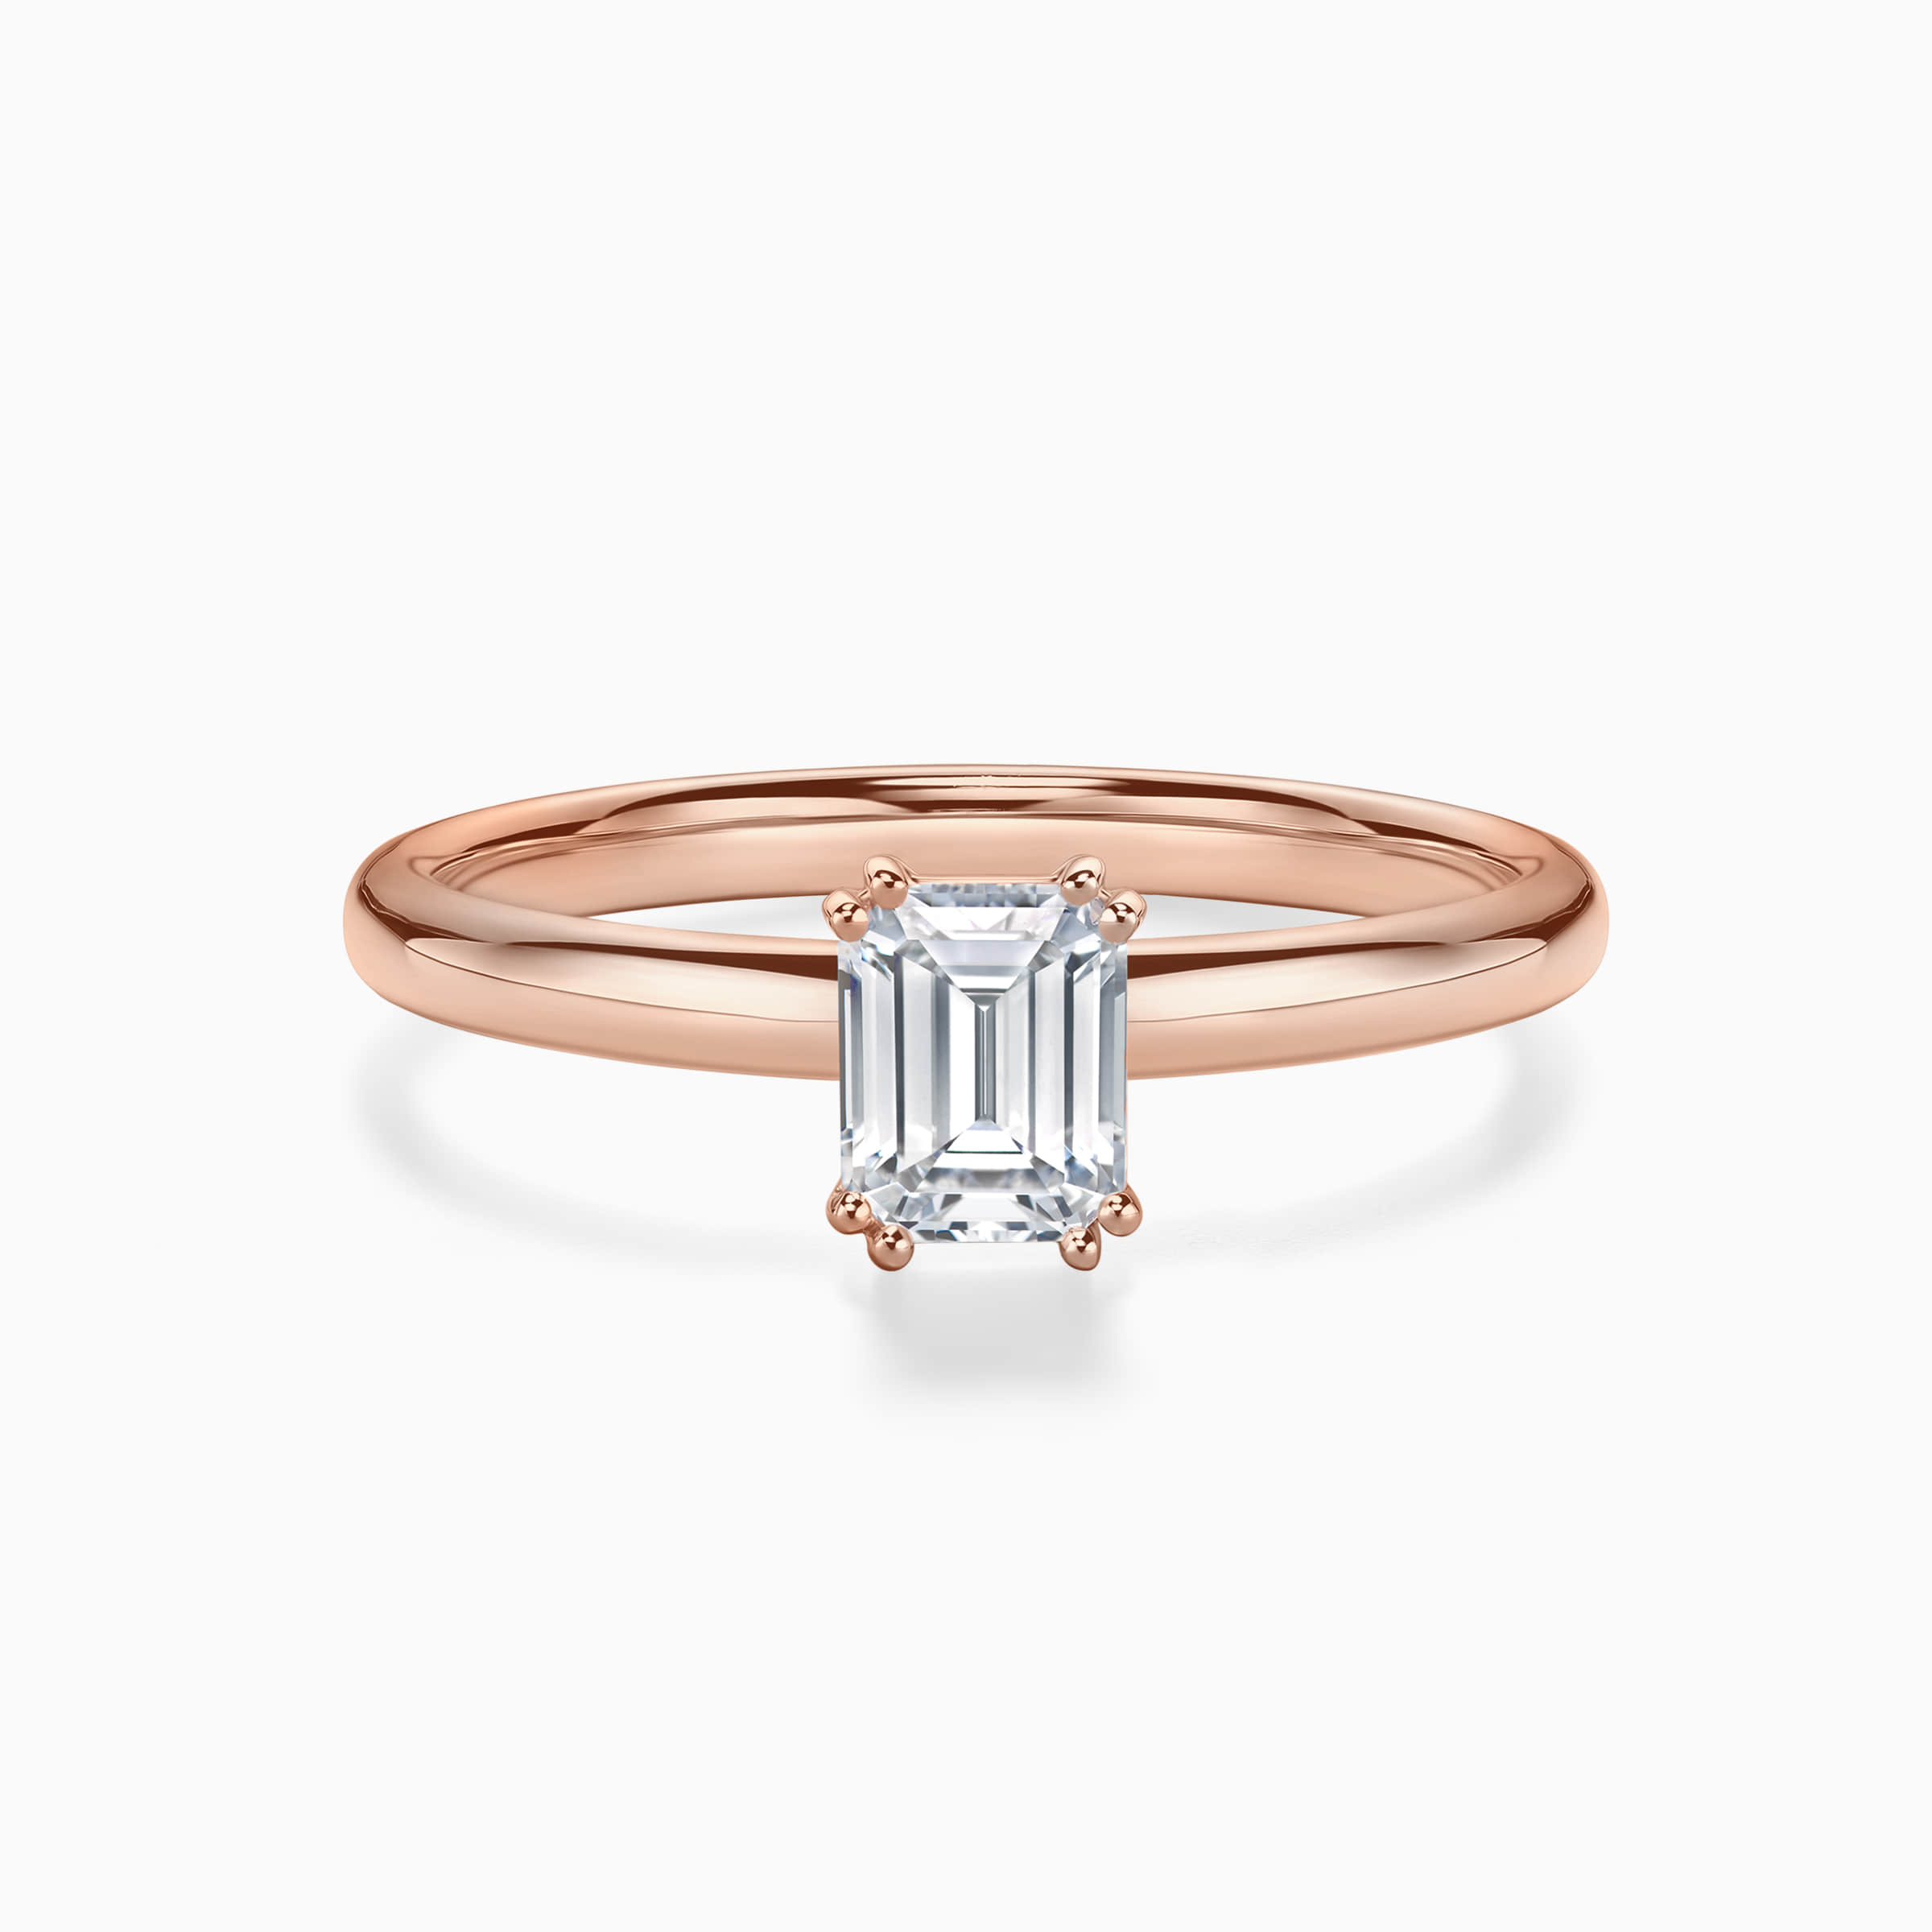 Darry Ring 2 carat emerald cut diamond engagement ring rose gold